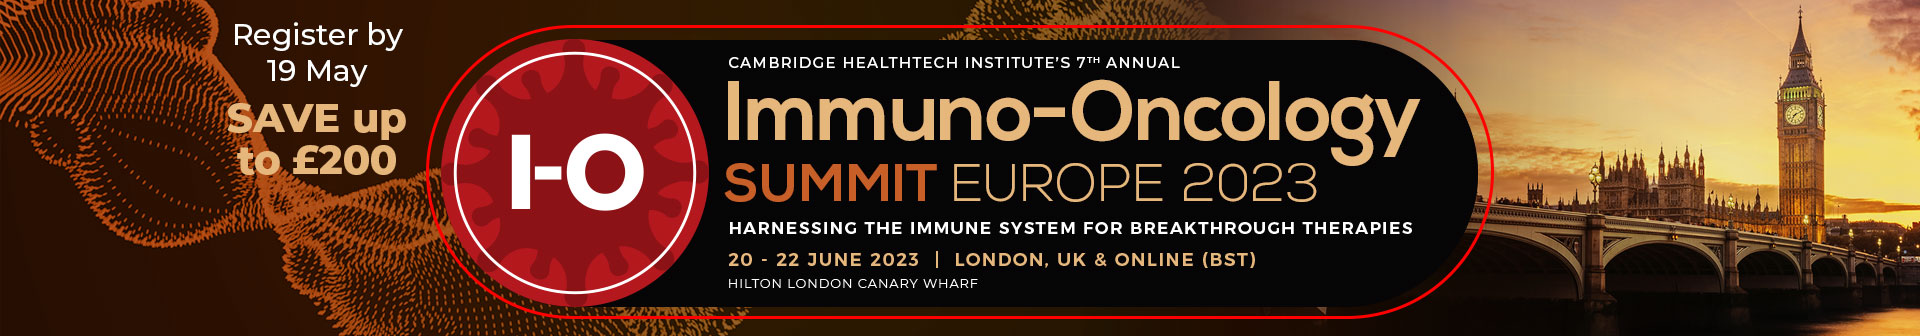 Immuno-Oncology Europe